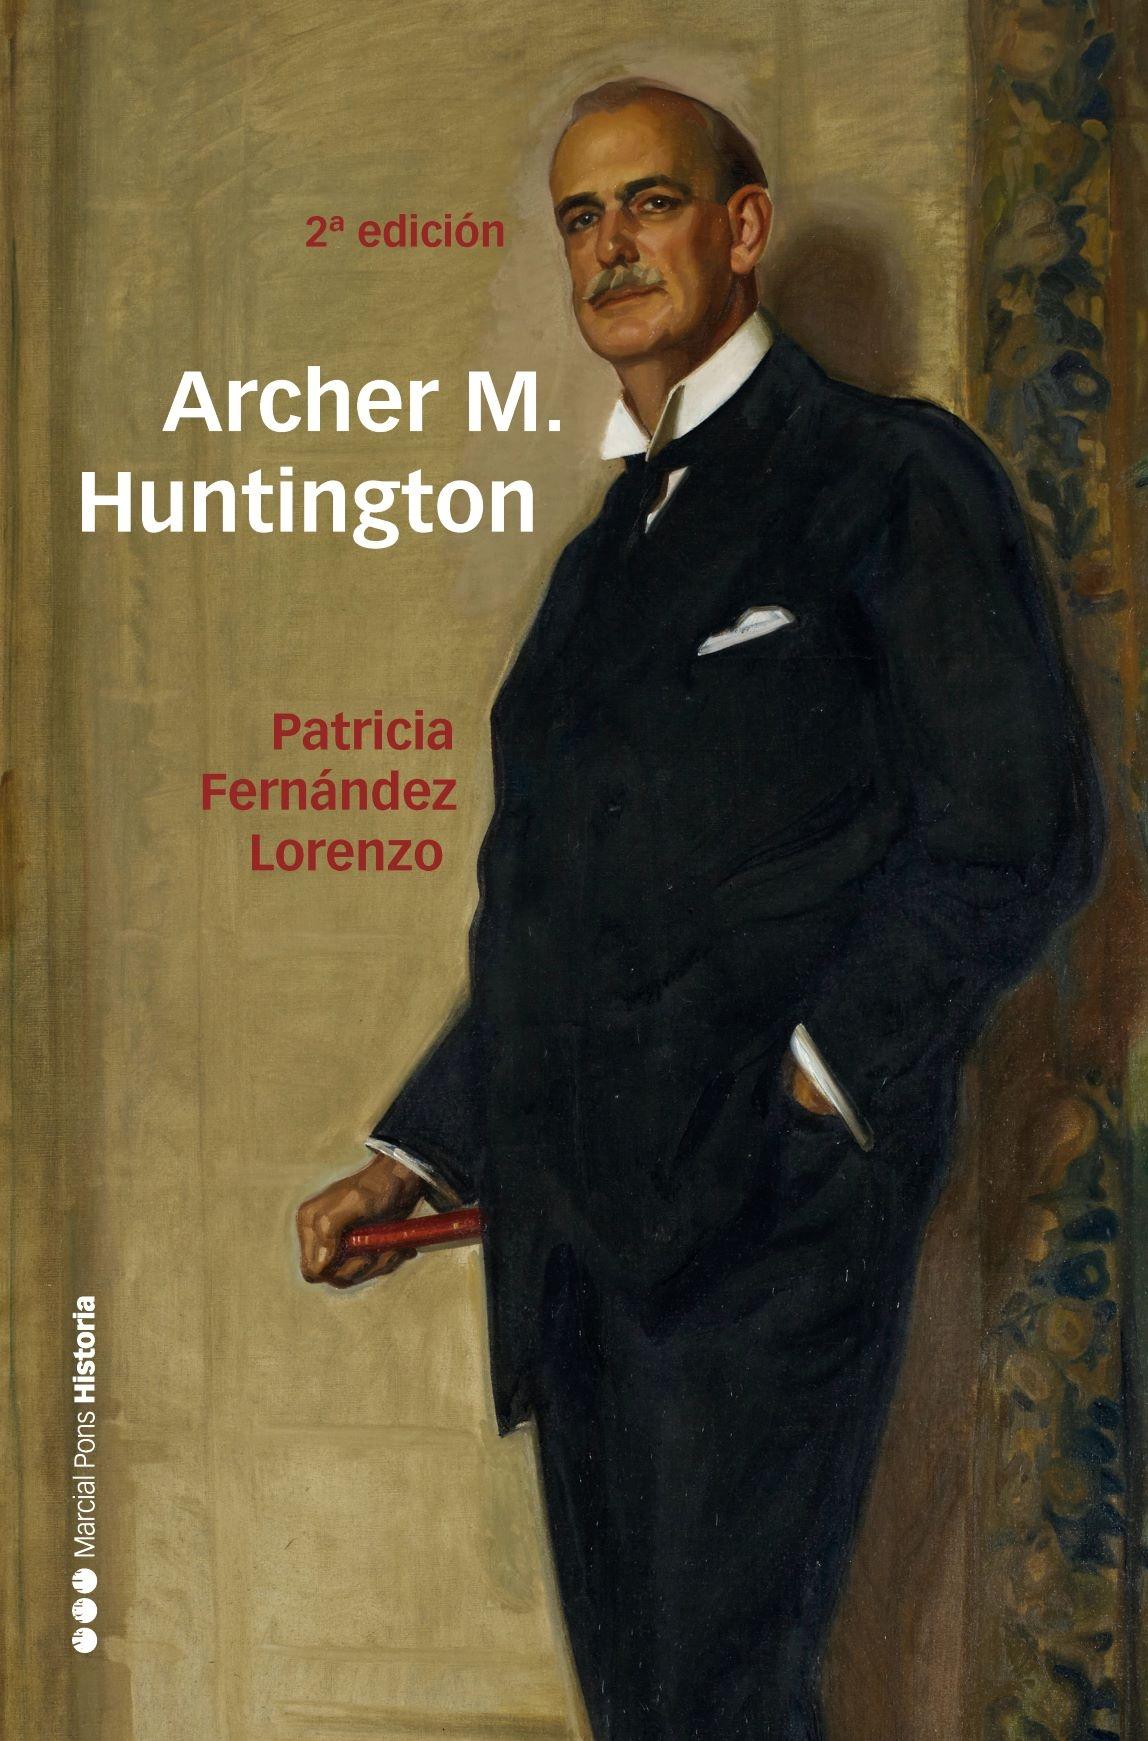 ARCHER M. HUNTINGTON. "EL FUNDADOR DE LA HISPANIC SOCIETY OF AMERICA EN ESPAÑA". 